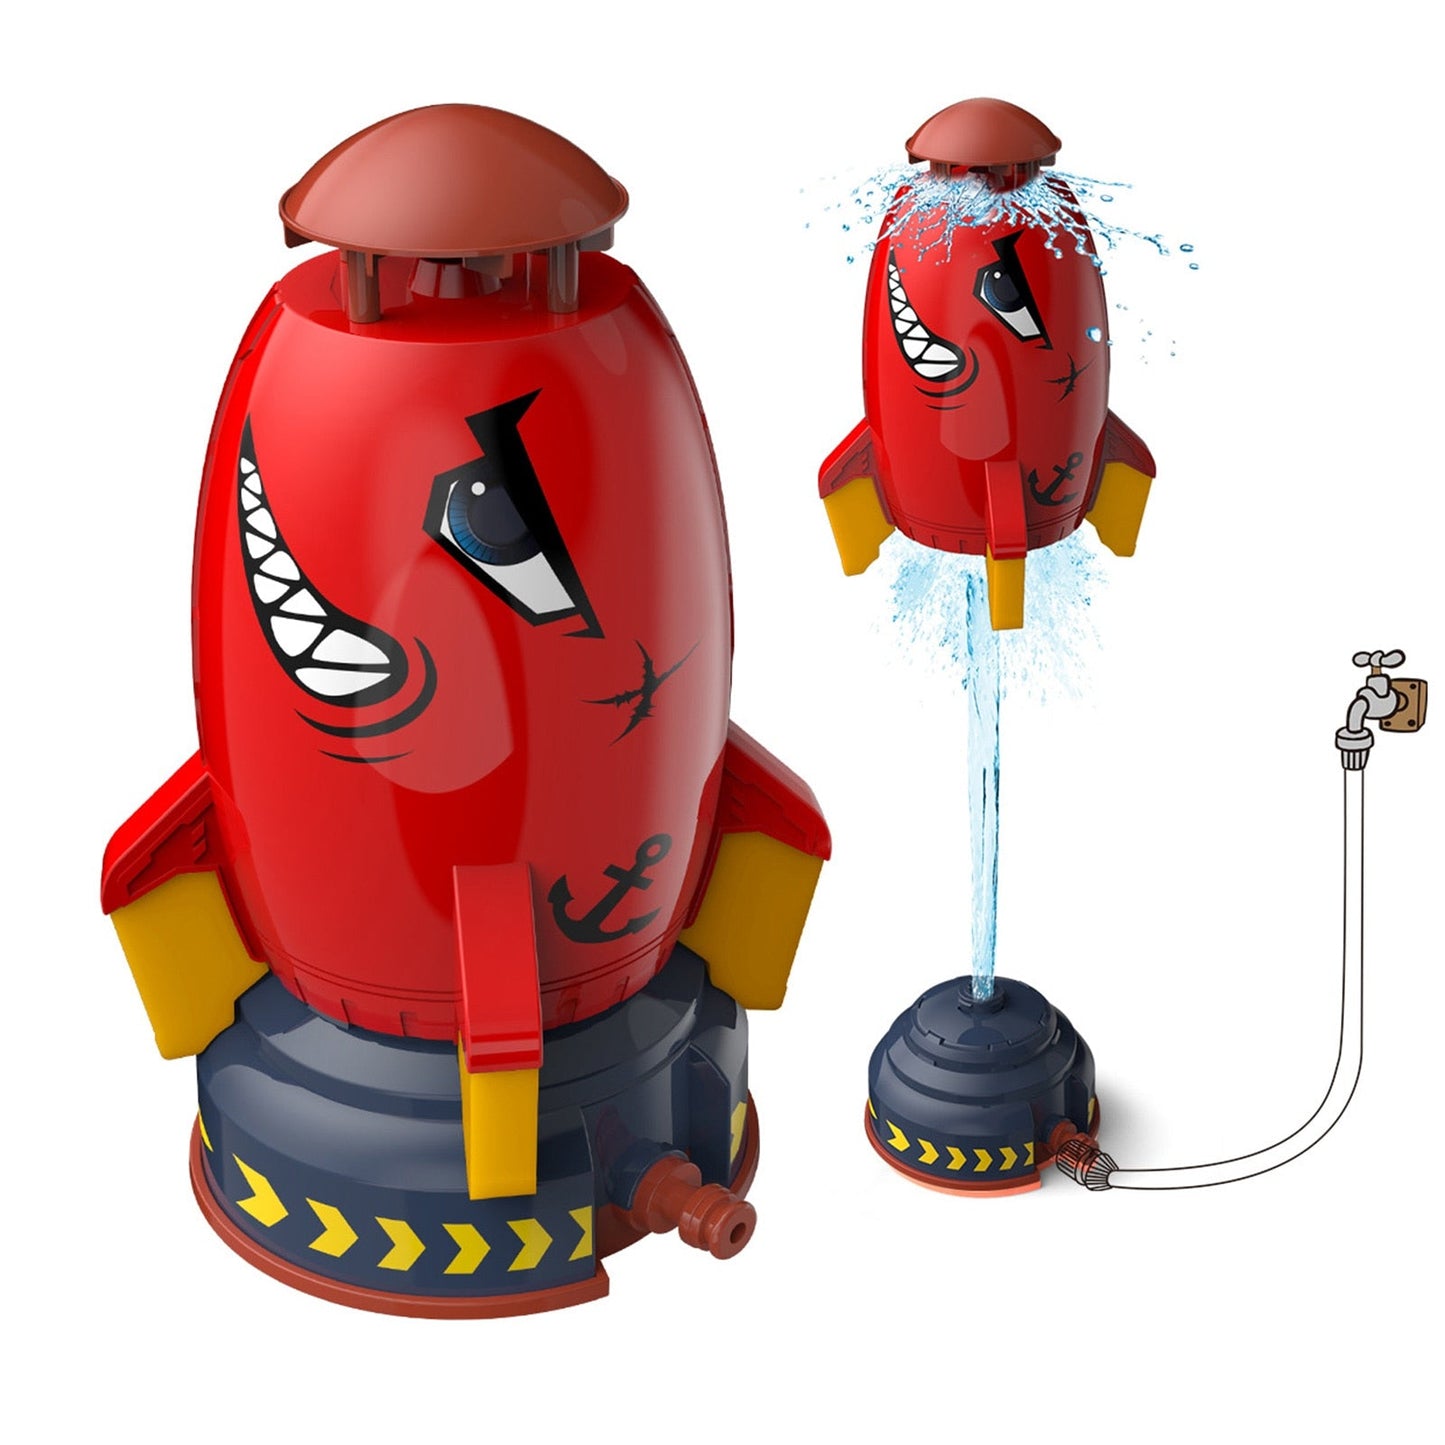 Water Spray Space Rocket Launcher Kids Toy